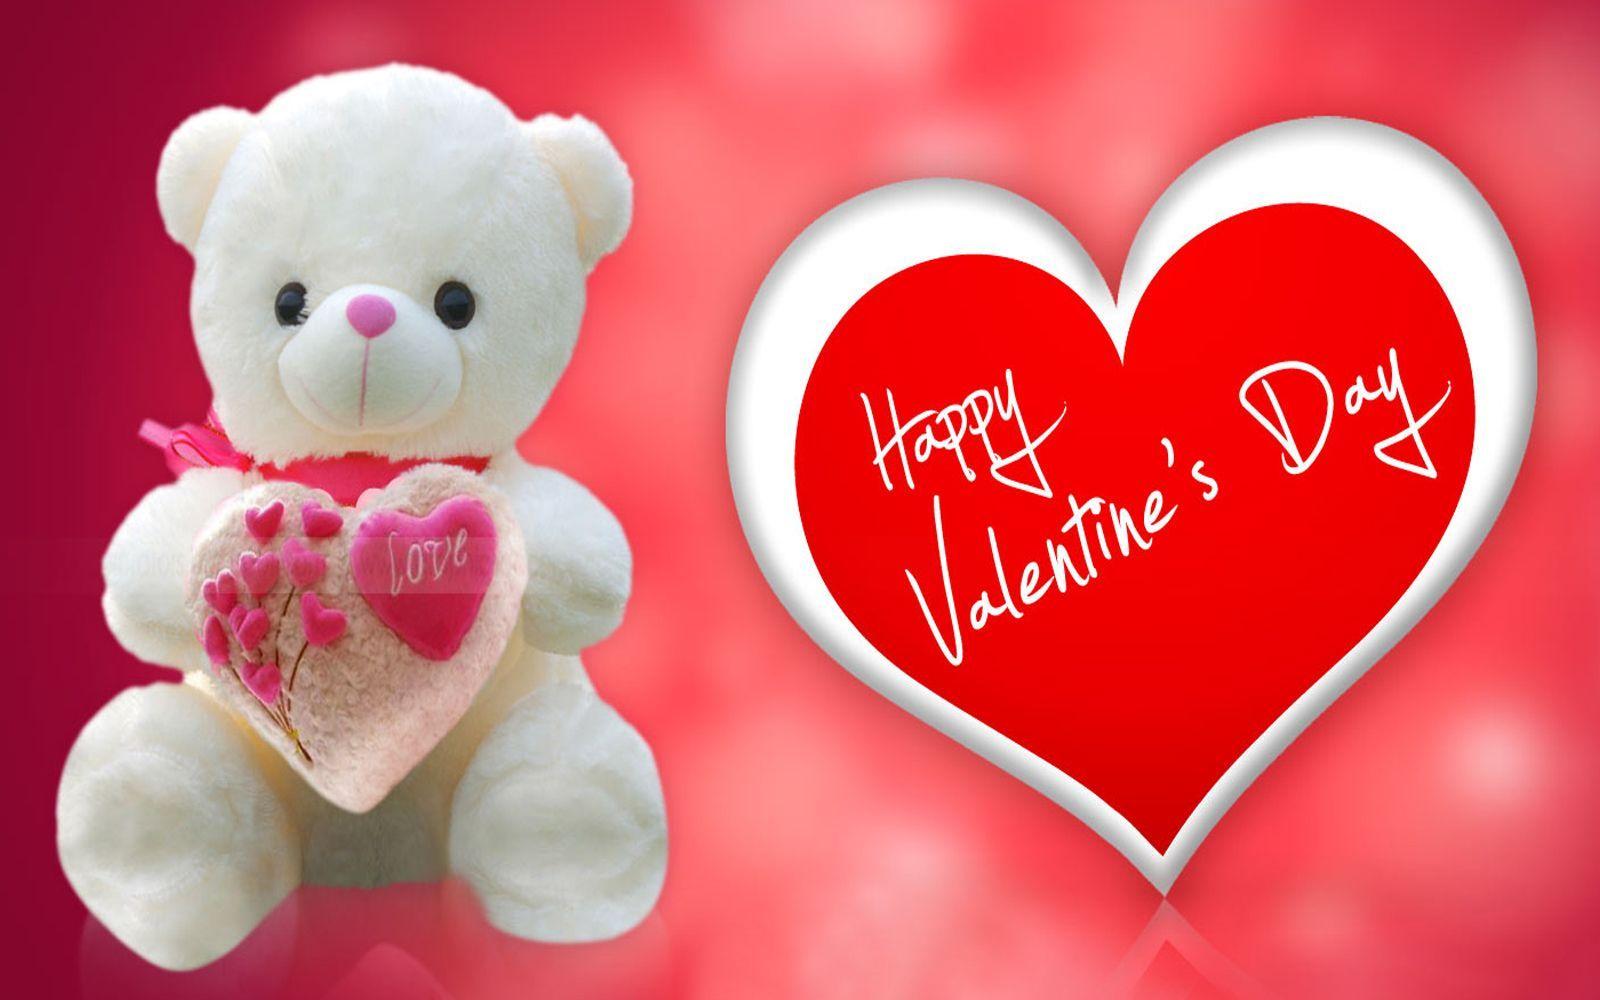 Happy Valentine&;s Day HD Wallpaper Image Photo Download Free